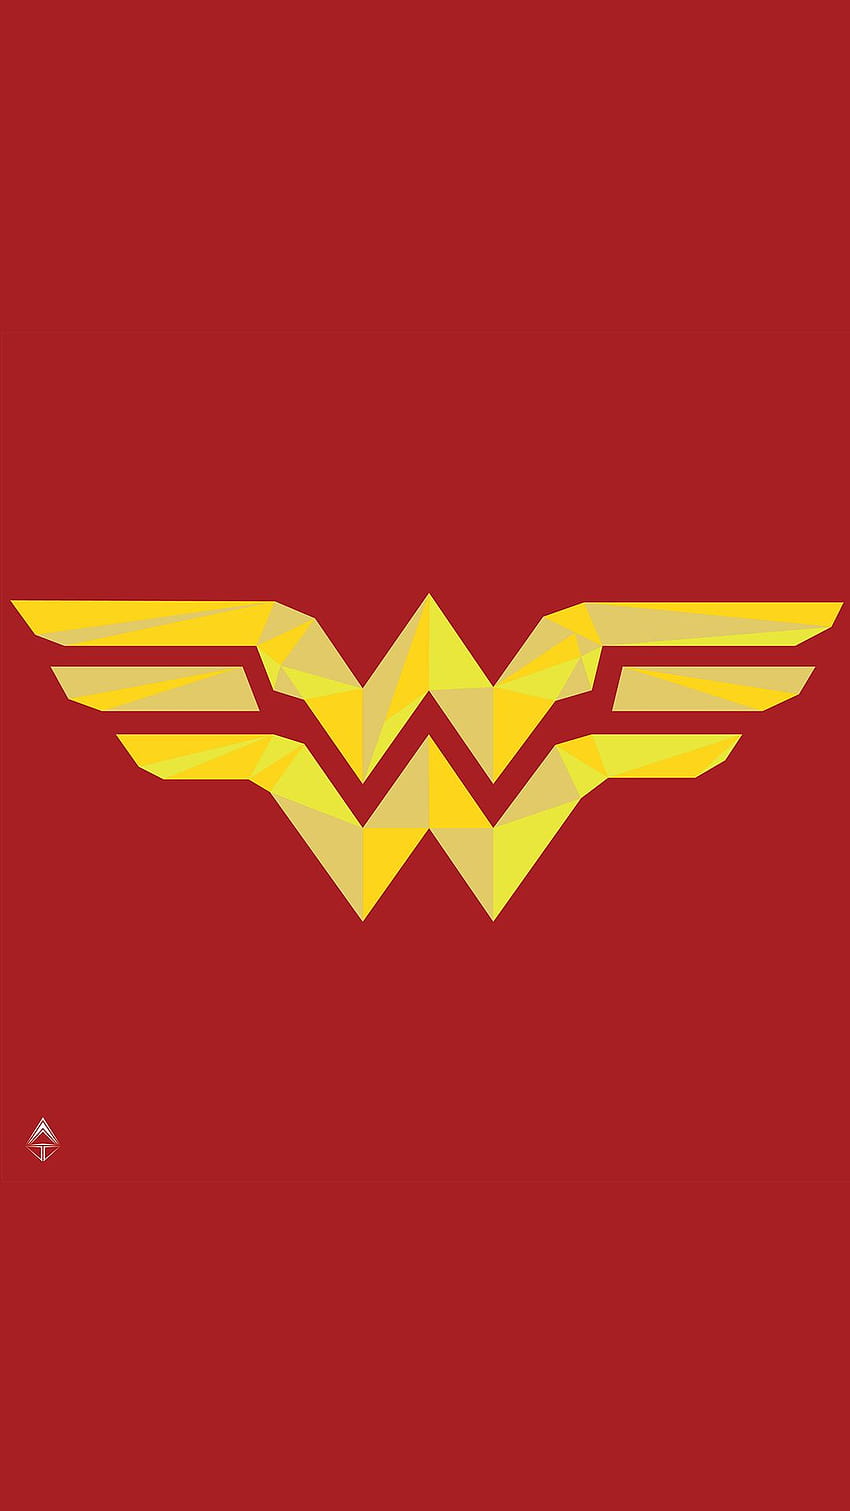 1080x1920 Wonder Woman Logo Artwork Iphone 7,6s,6 Plus, Pixel xl ,One Plus 3,3t,5 , Backgrounds, and, wonder woman symbol HD phone wallpaper